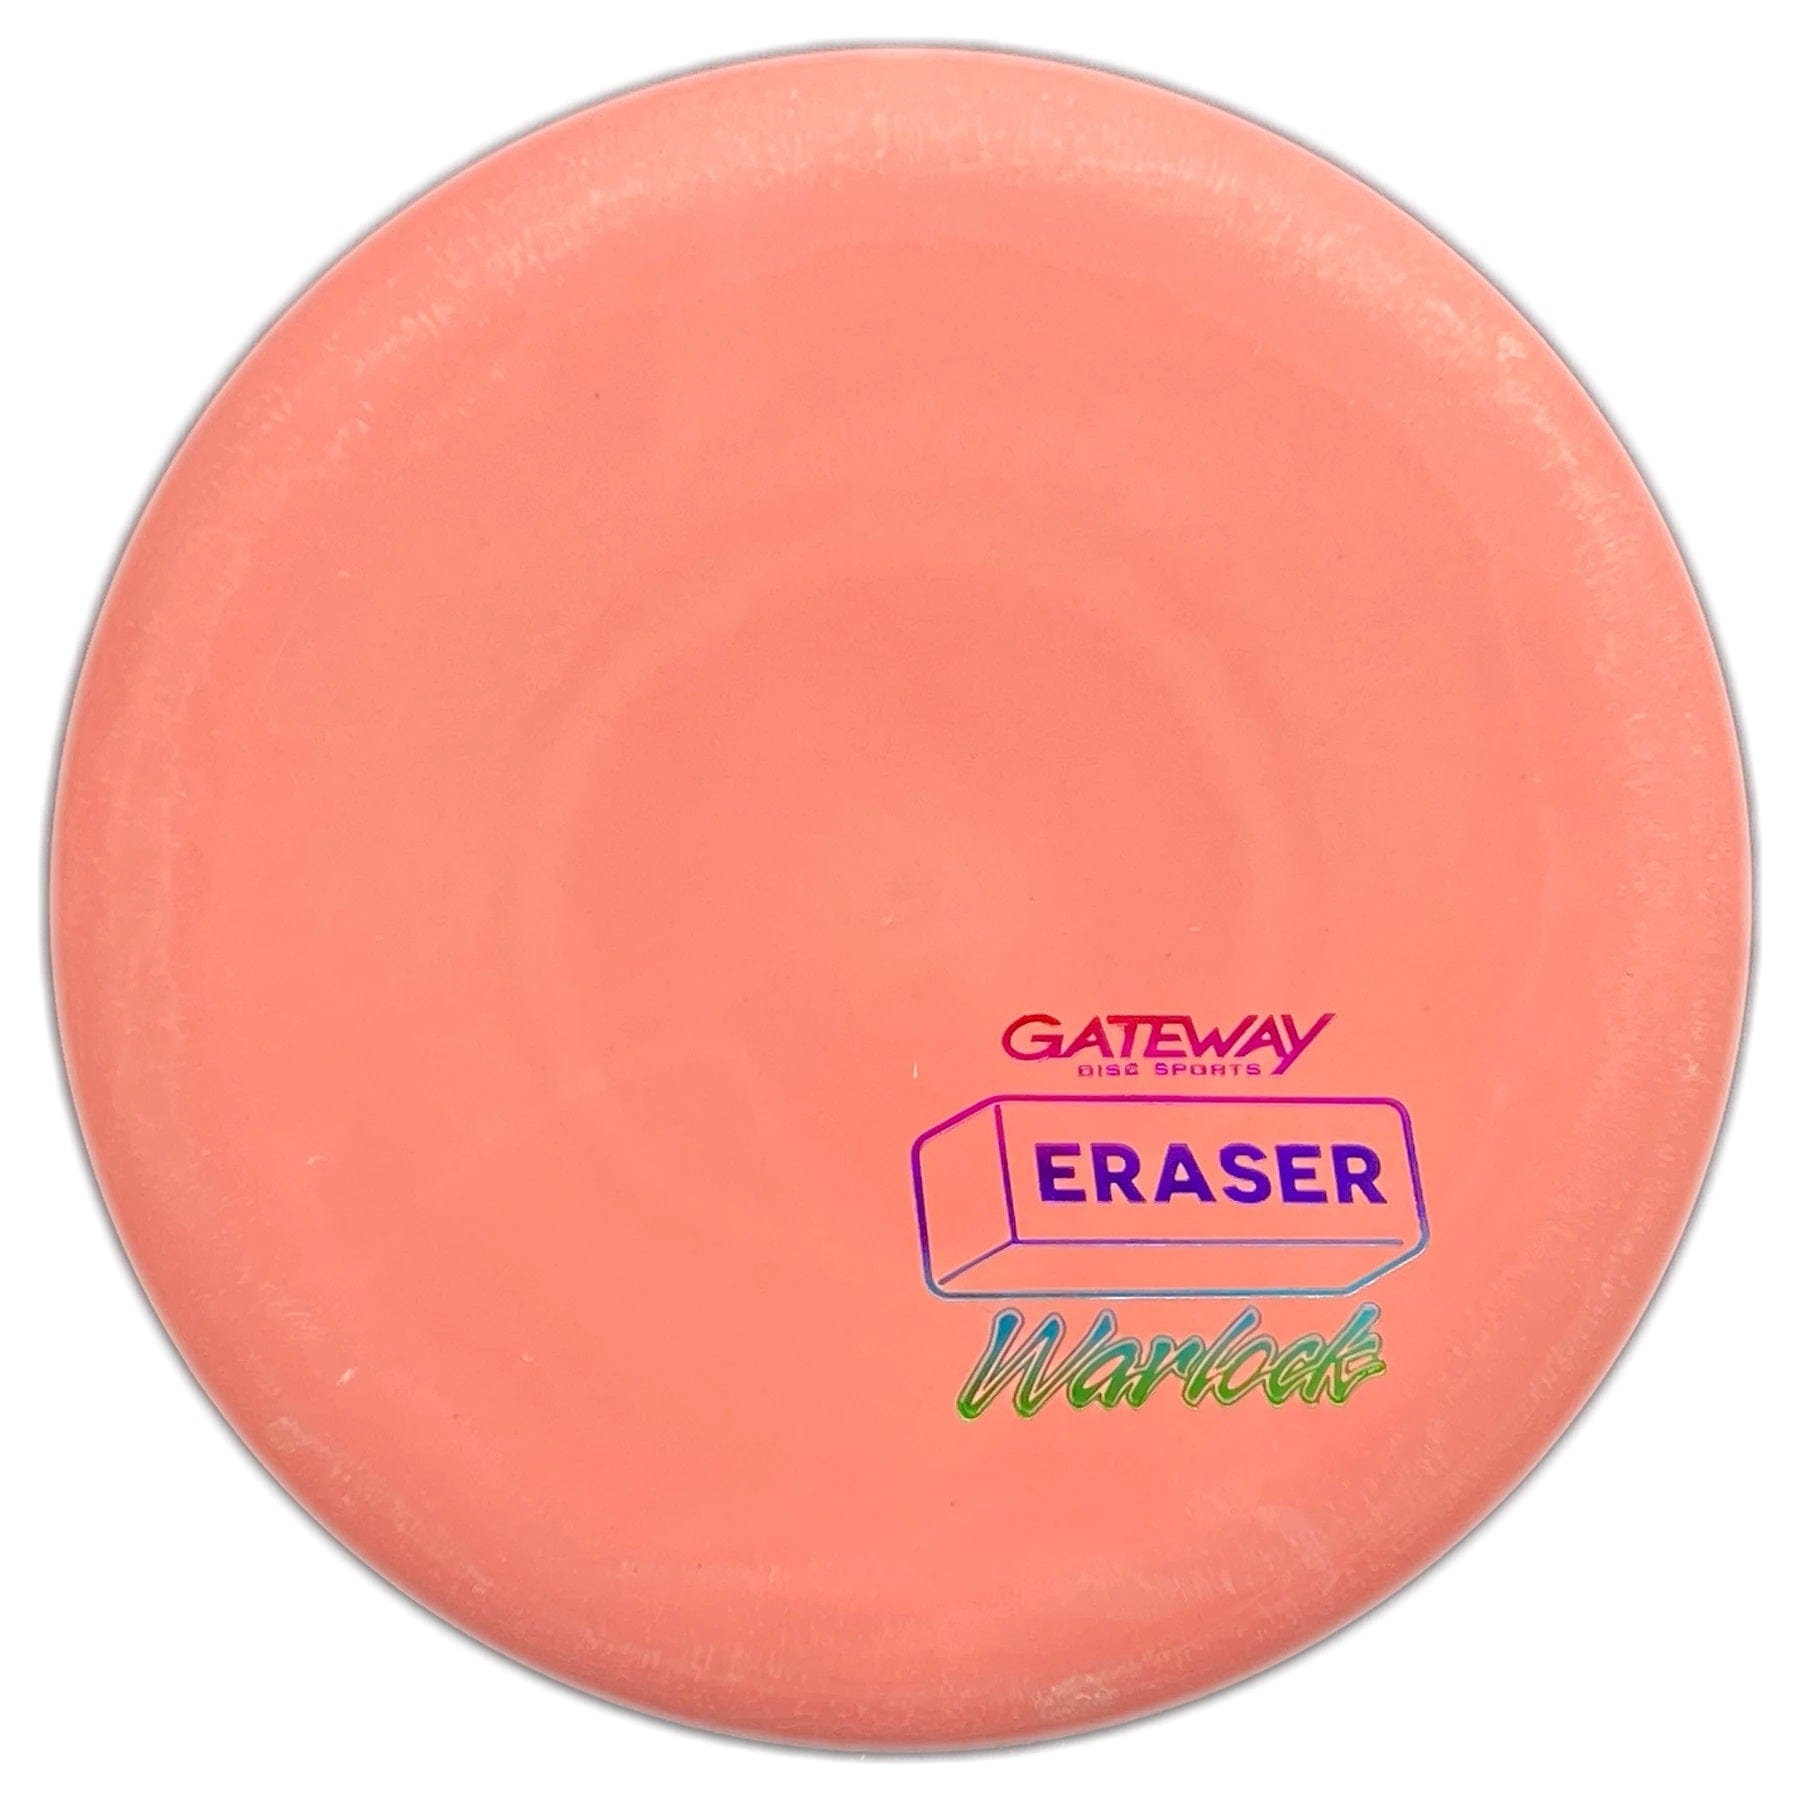 Gateway Disc Sports Golf Disc Gateway Eraser Warlock Putter Golf Disc